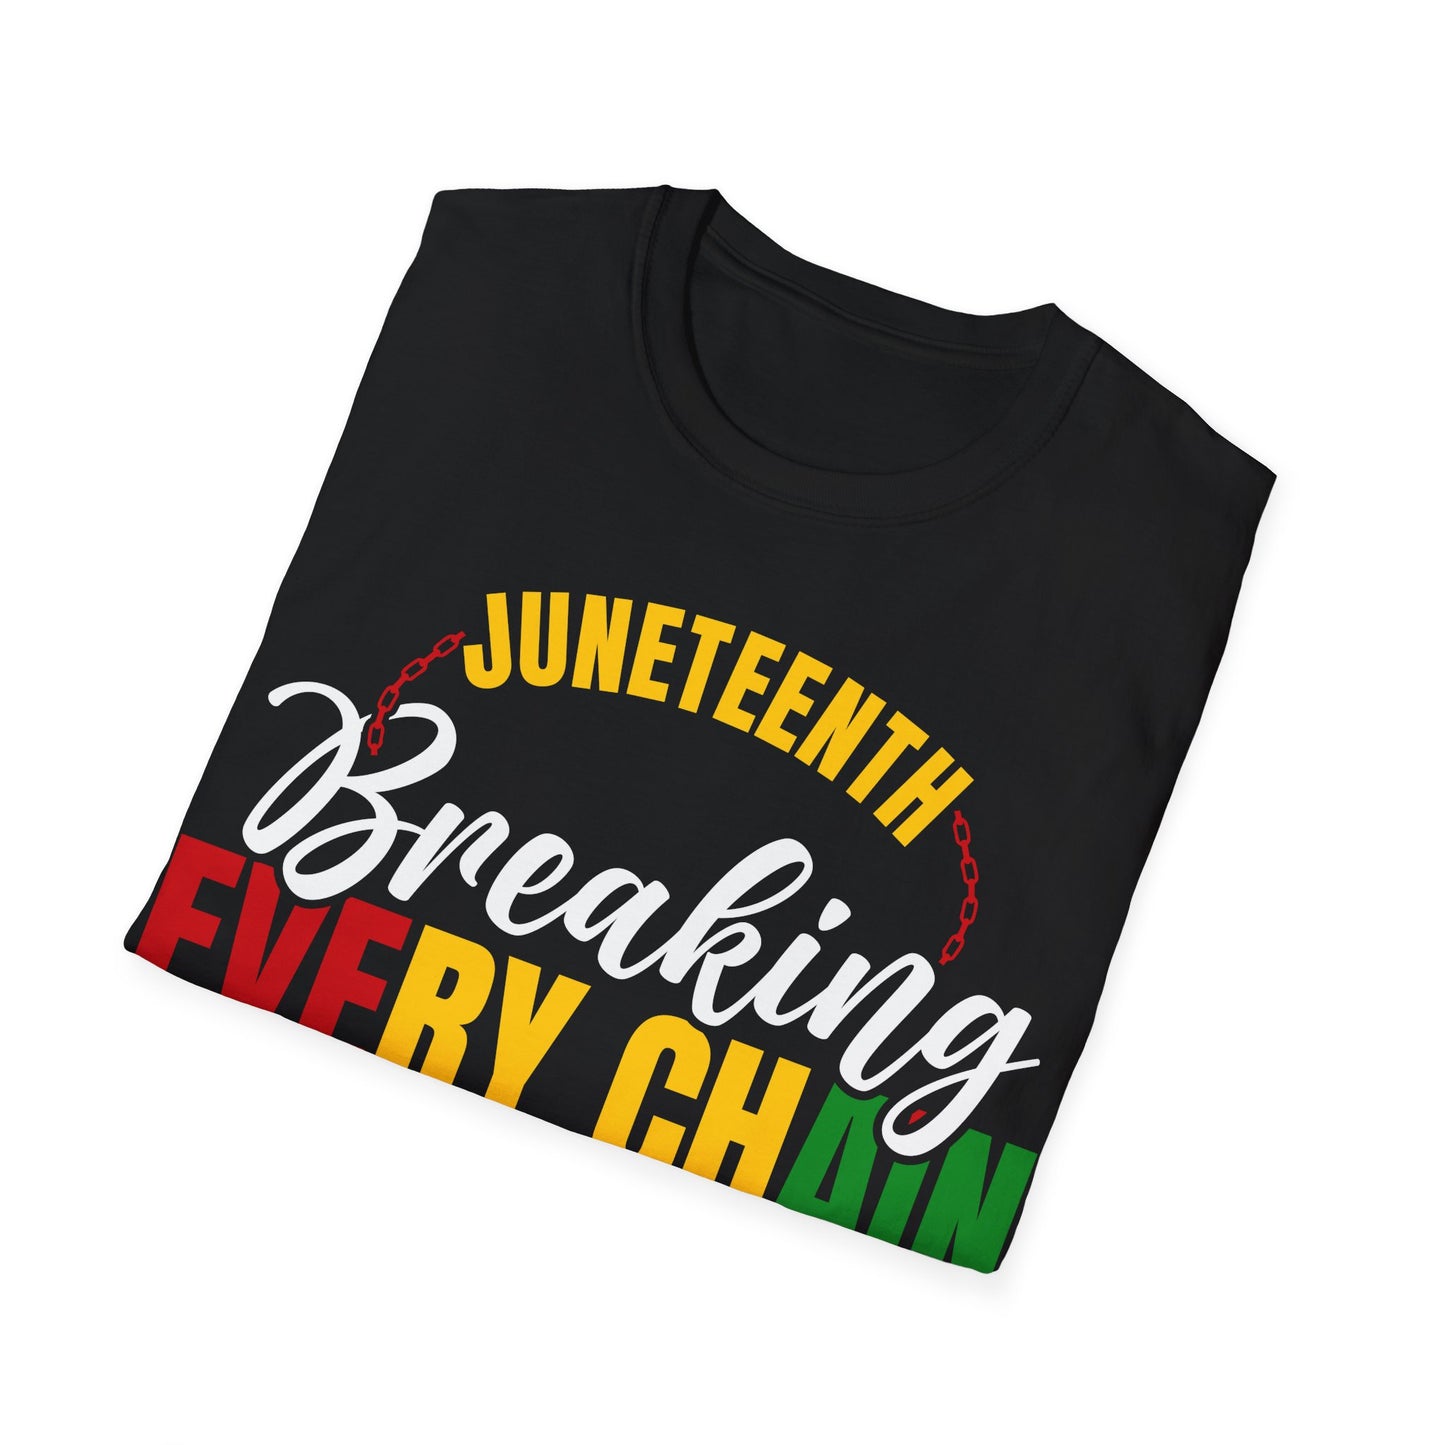 Juneteenth "Breaking Every Chain"  T-Shirt